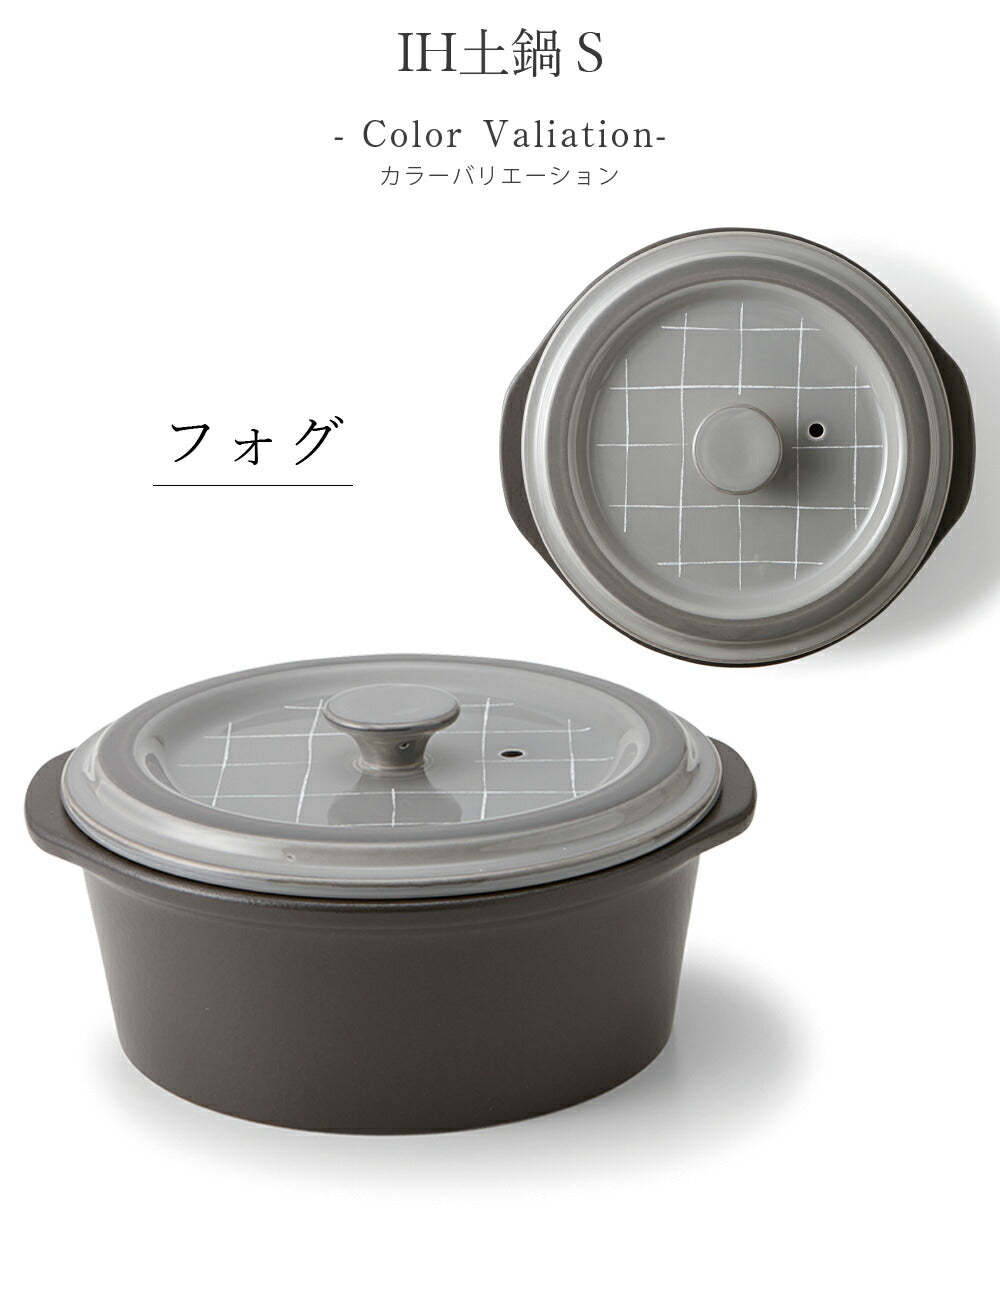 Earthen pot IH compatible, open flame compatible [IH earthen pot S] Retro floral pattern simple Japanese tableware [Maruri] [Silent-]